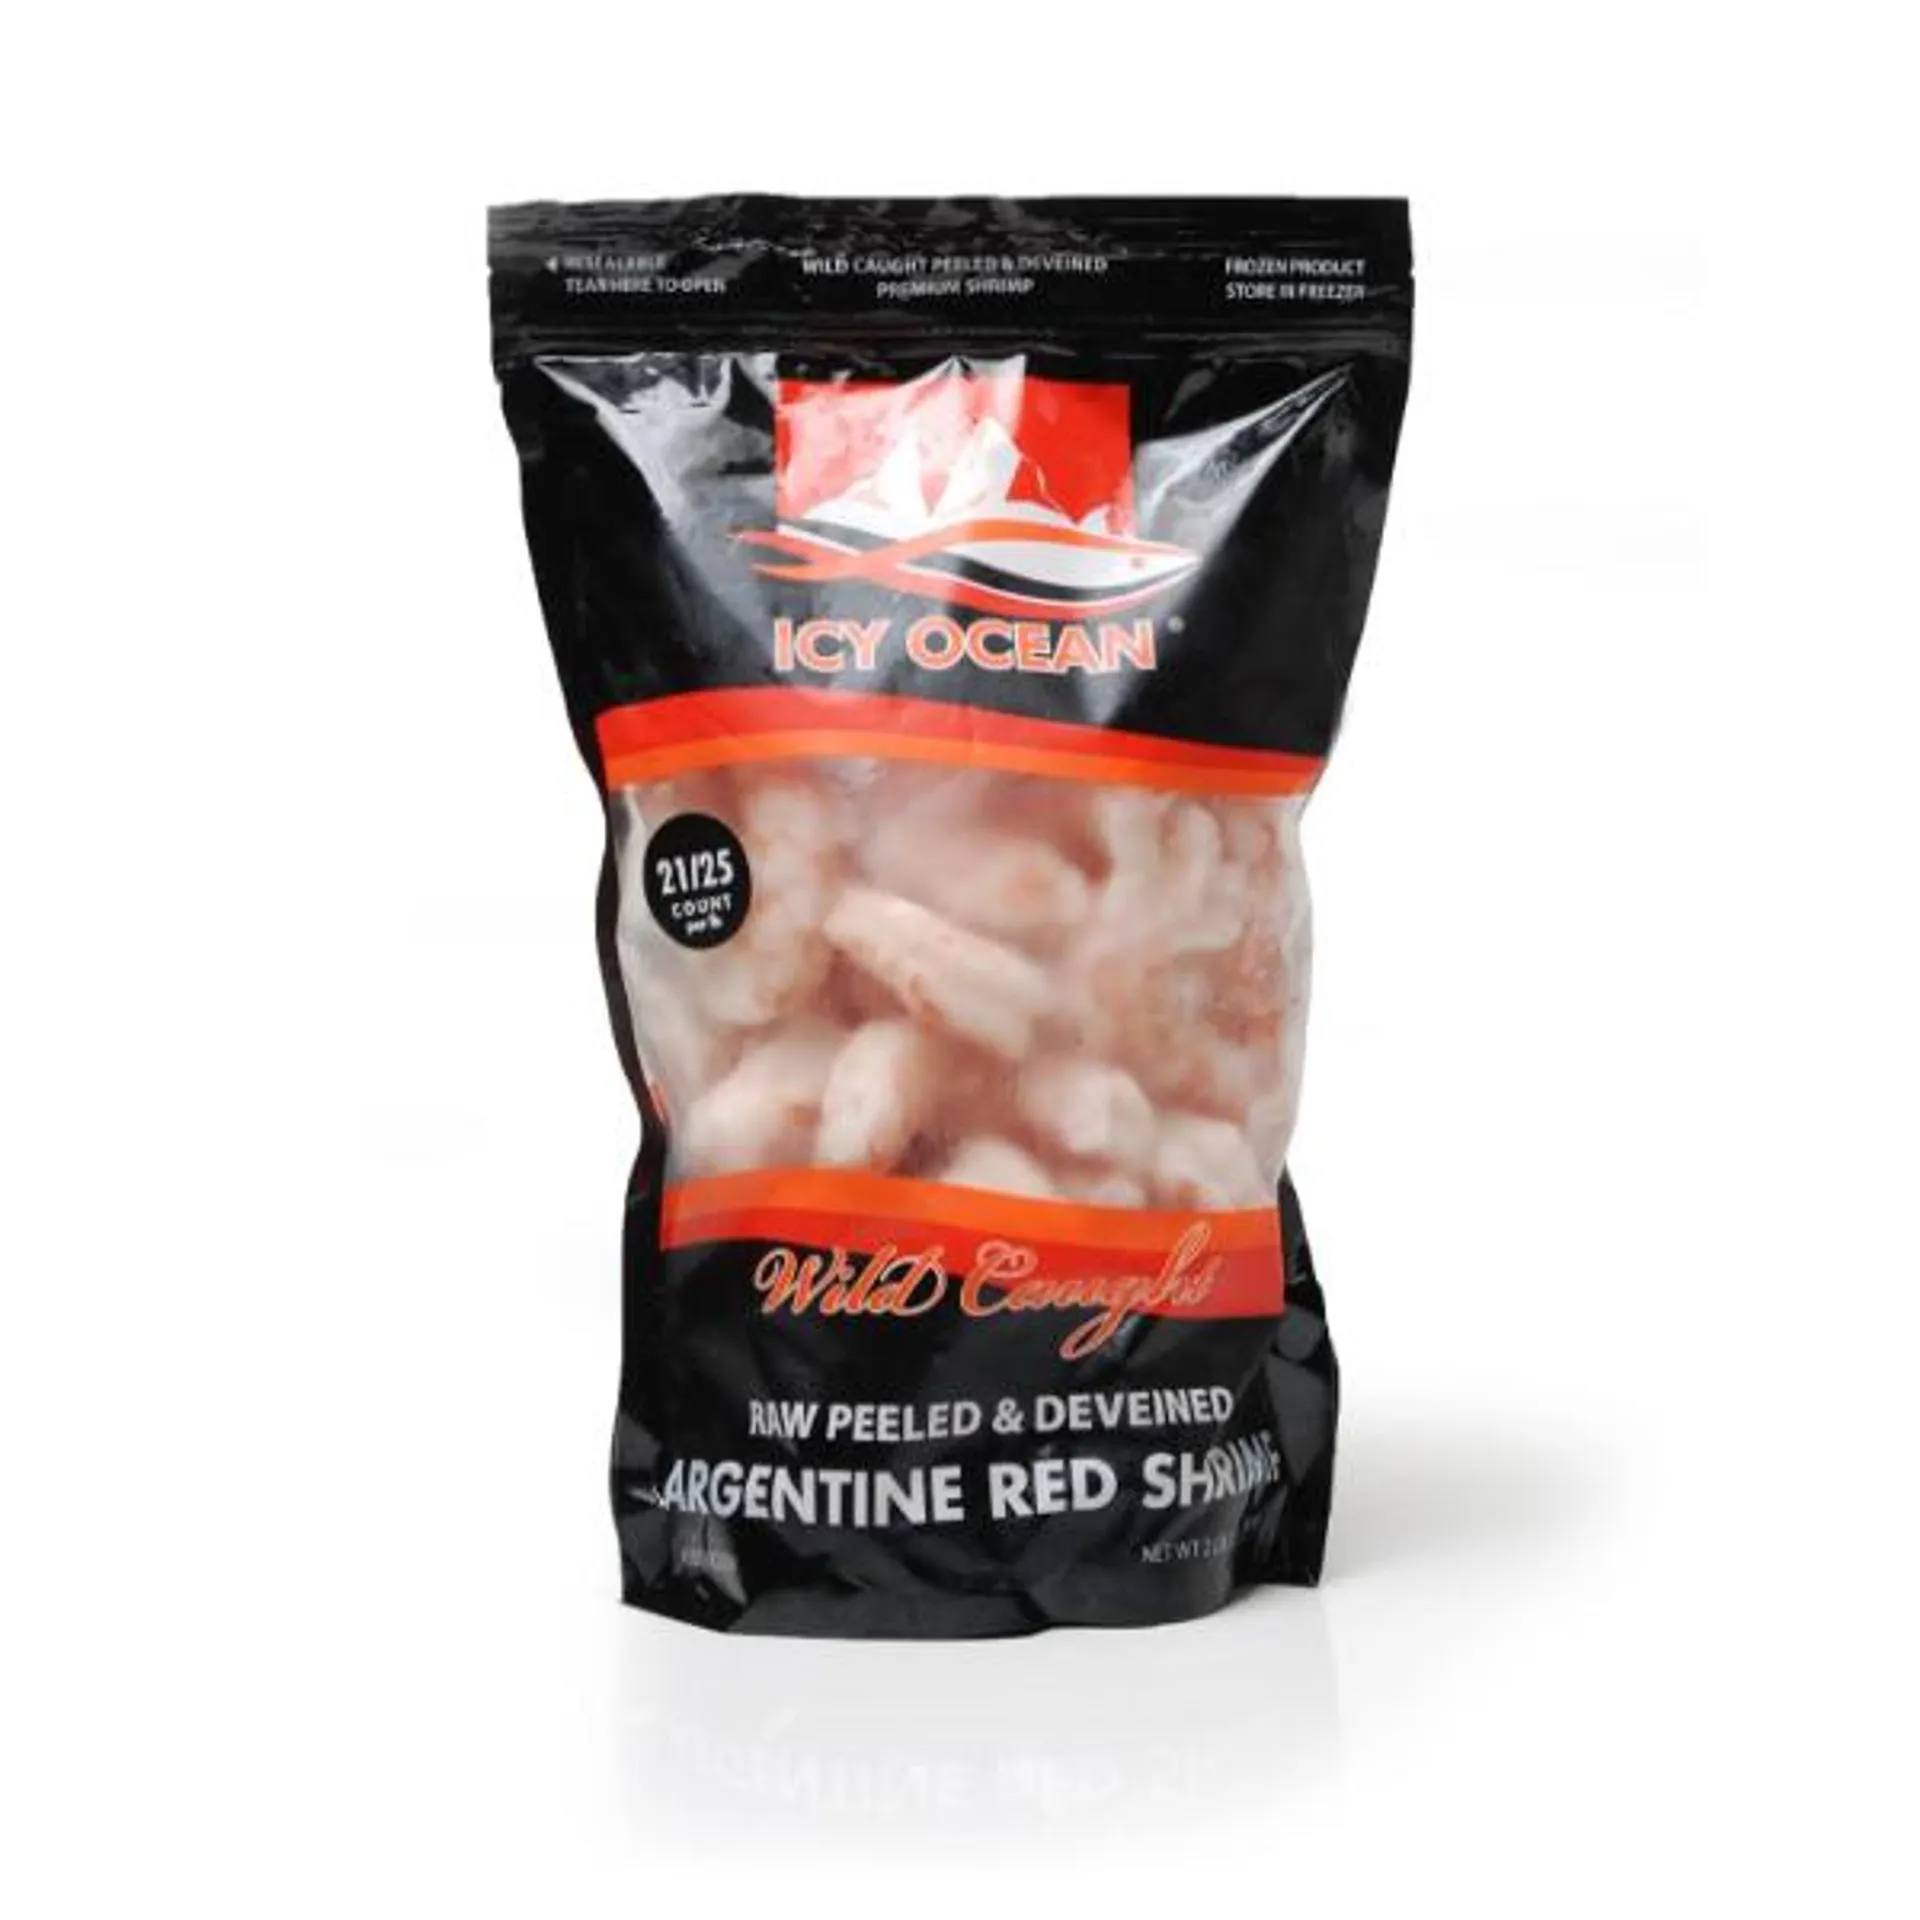 21/25 Ct Peeled & Deveined Raw Shrimp - 2 Pound